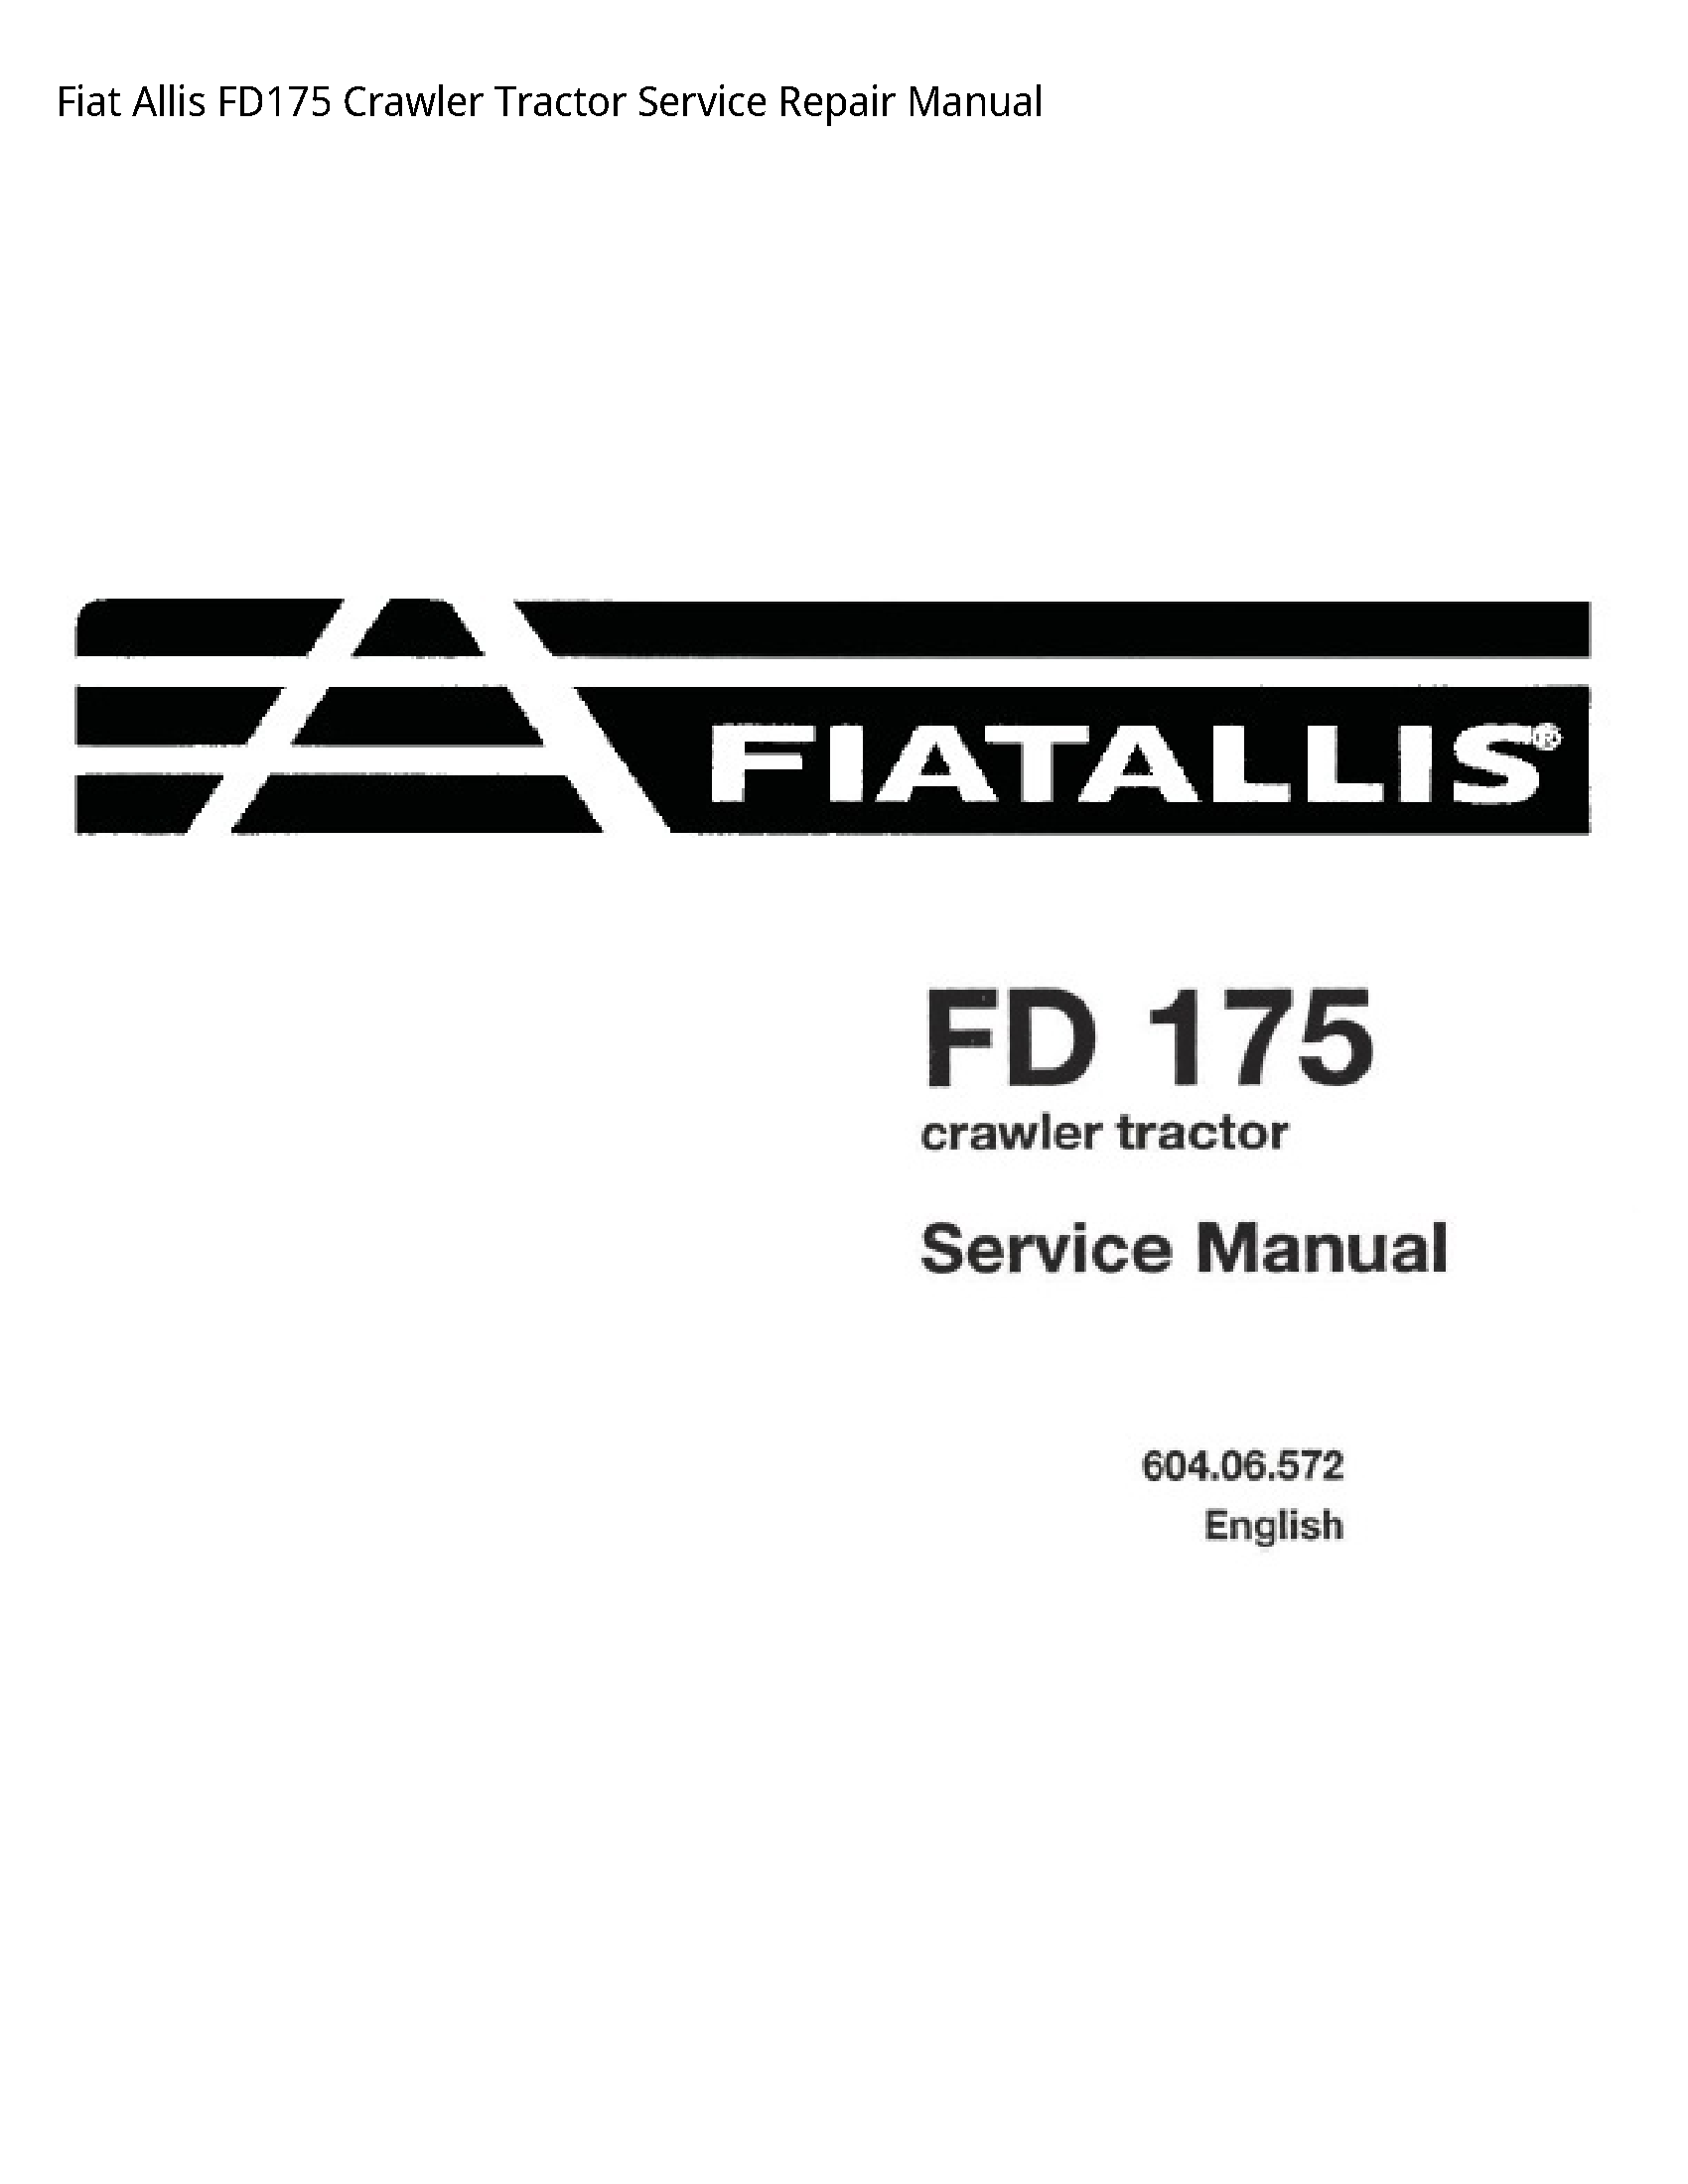 Fiat Allis FD175 Crawler Tractor manual